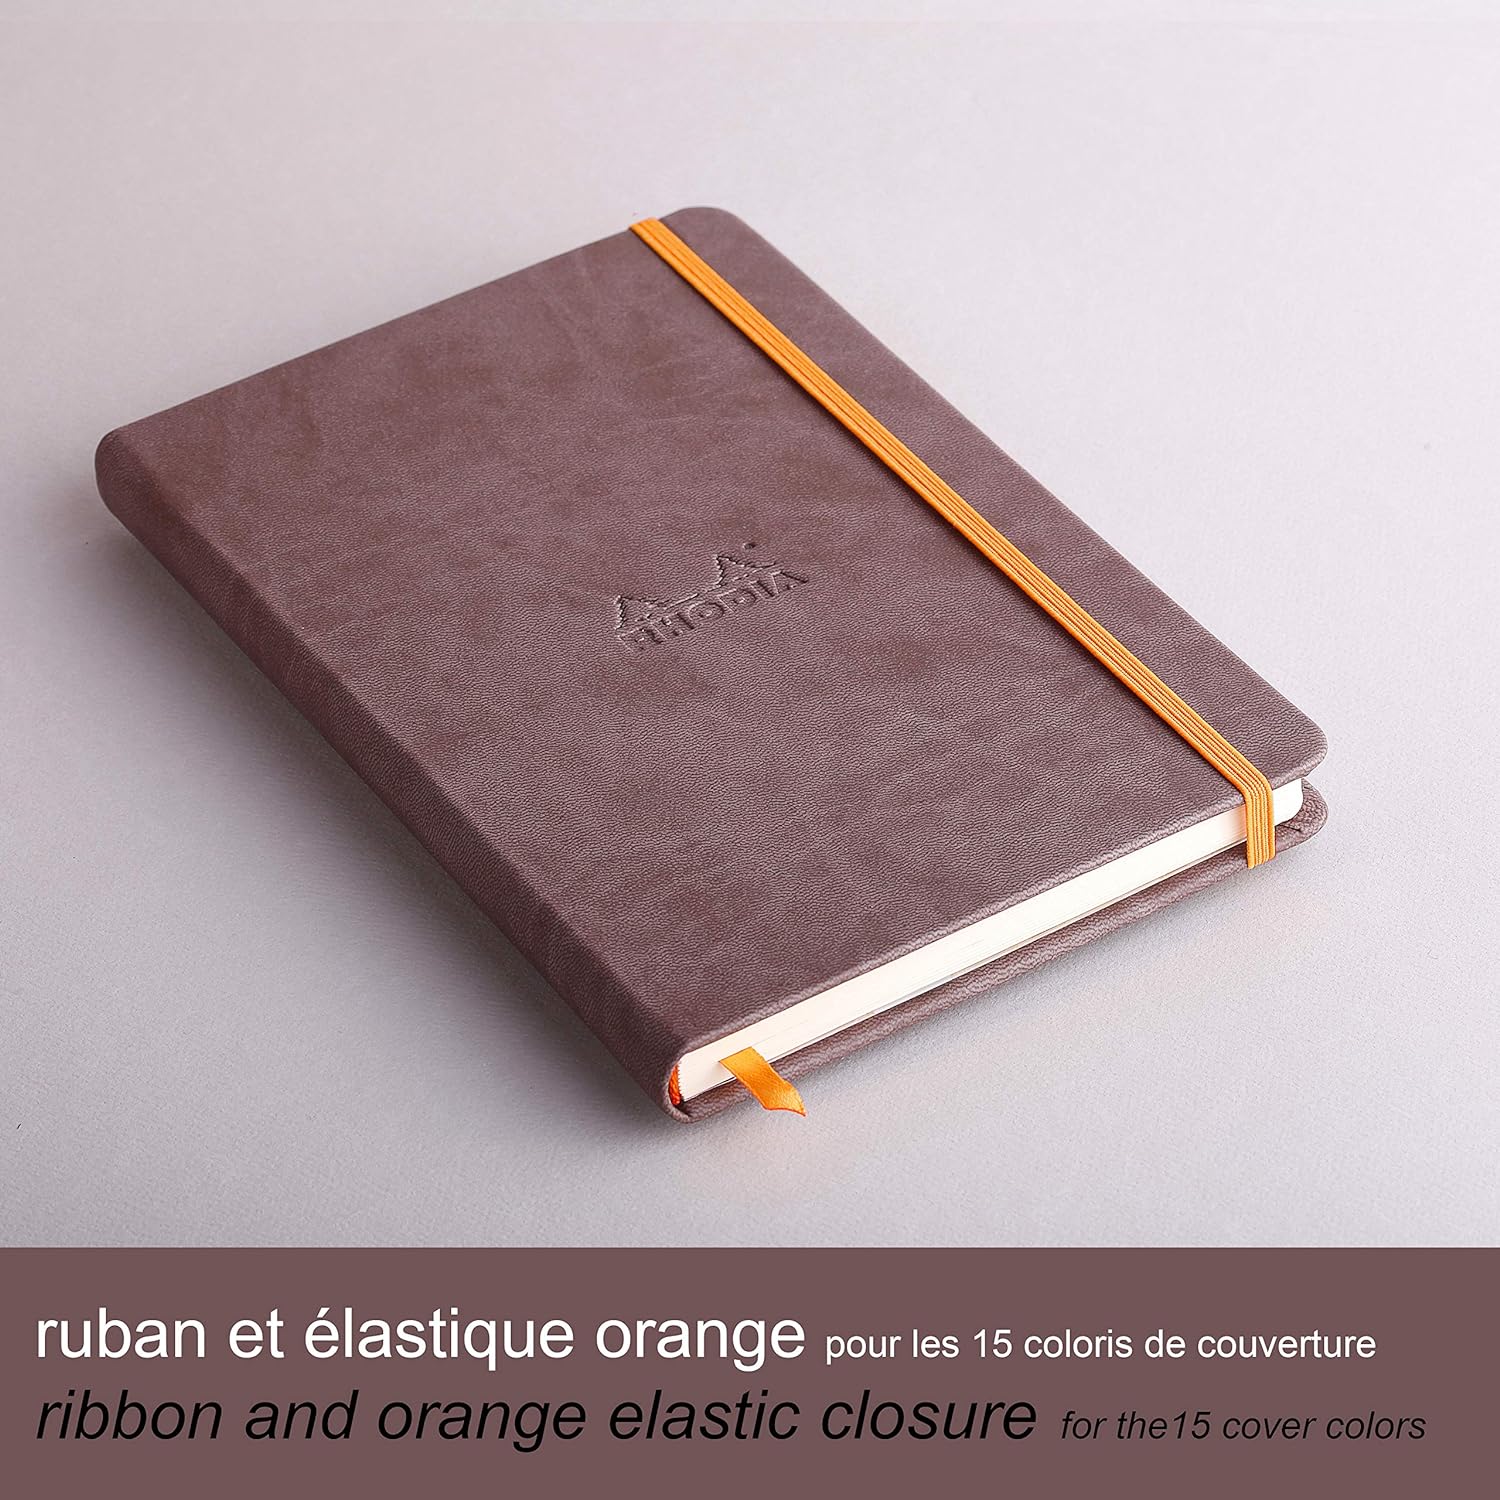 RHODIArama Webnotebook A5 Ivory Lined Hardcover-Chocolate